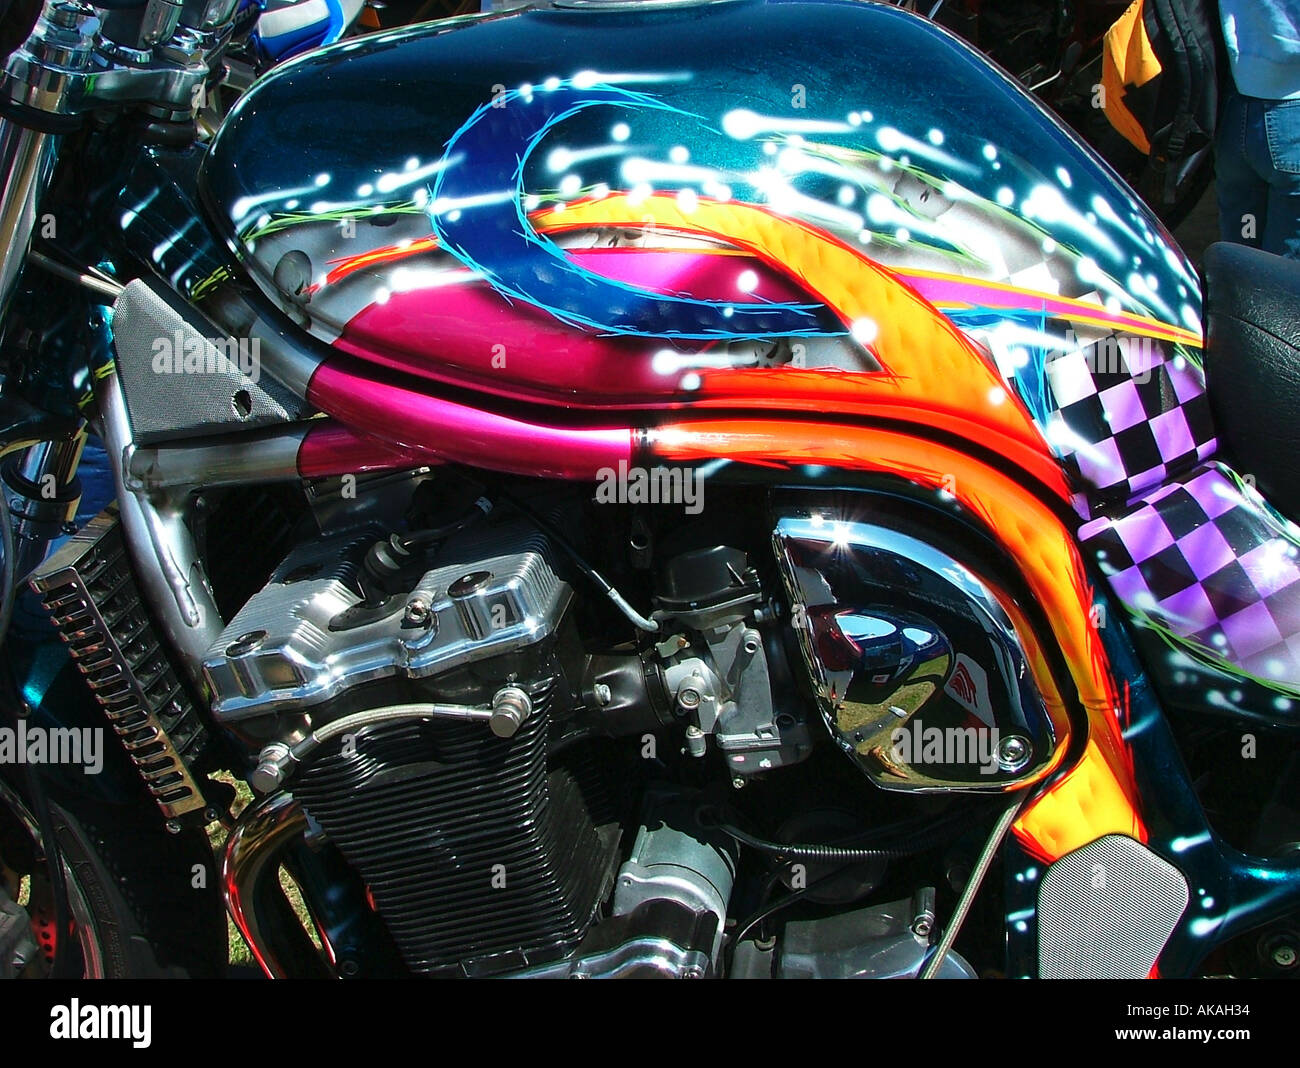 Individuelle Motorrad Lackierung BMF Peterborough UK Stockfotografie - Alamy